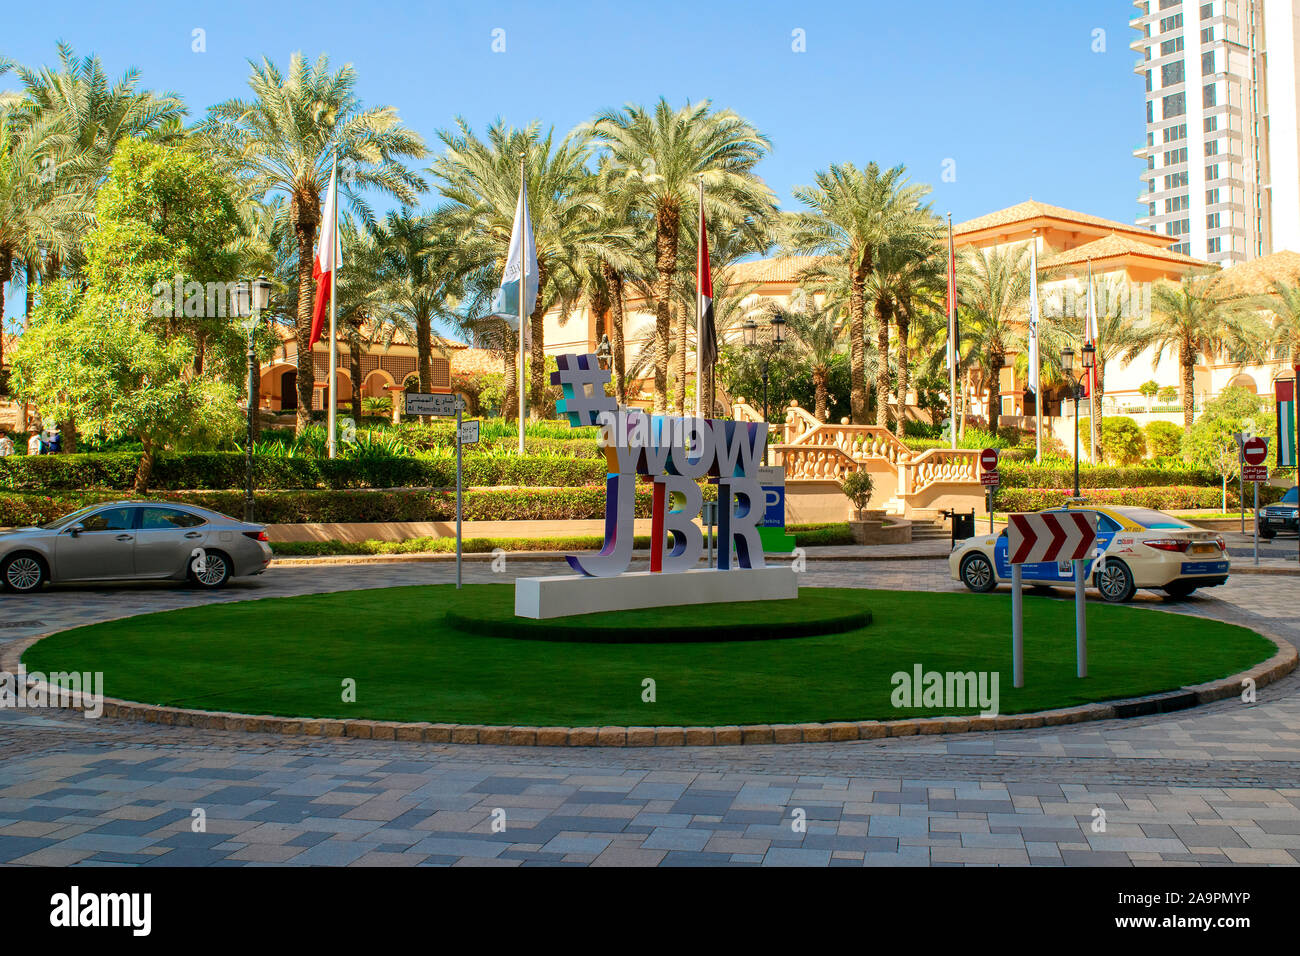 Dubai / UAE - November 11, 2019: WOW JBR word. View of Jumeirah Beach Residence luxury tourist district with big inscription 'JBR'. Stock Photo